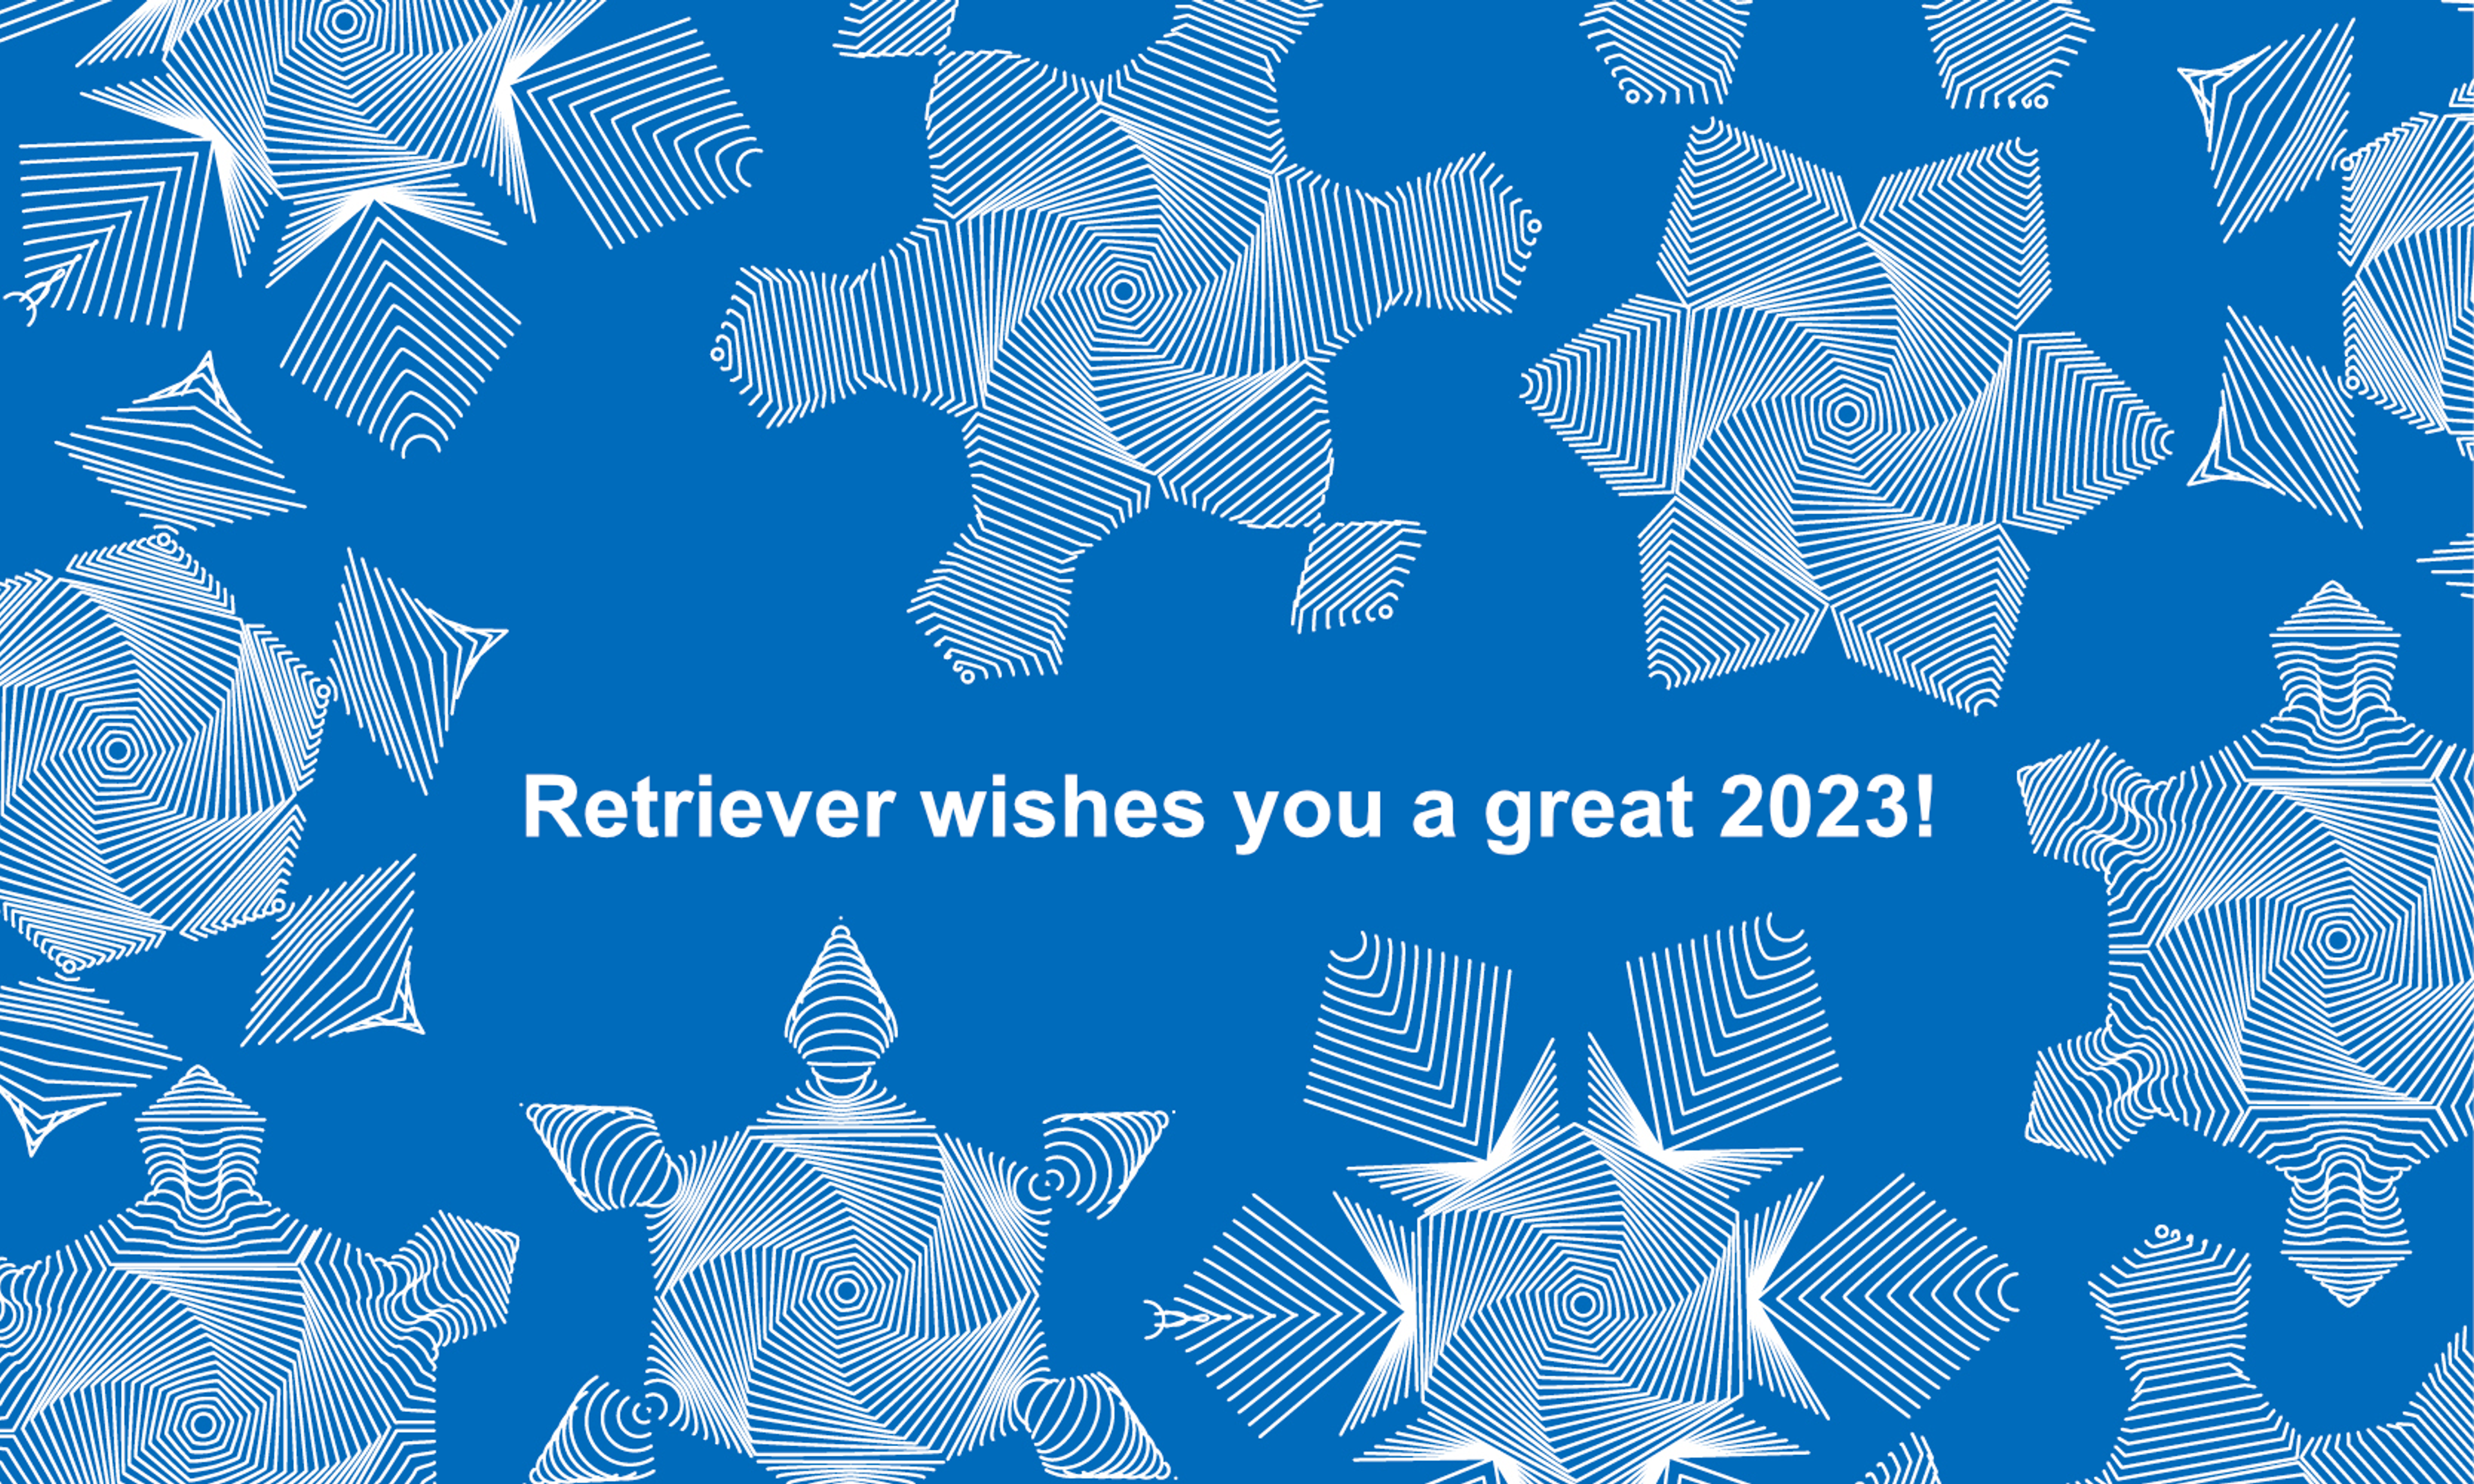   Retriever wishes everyone a happy 2023!